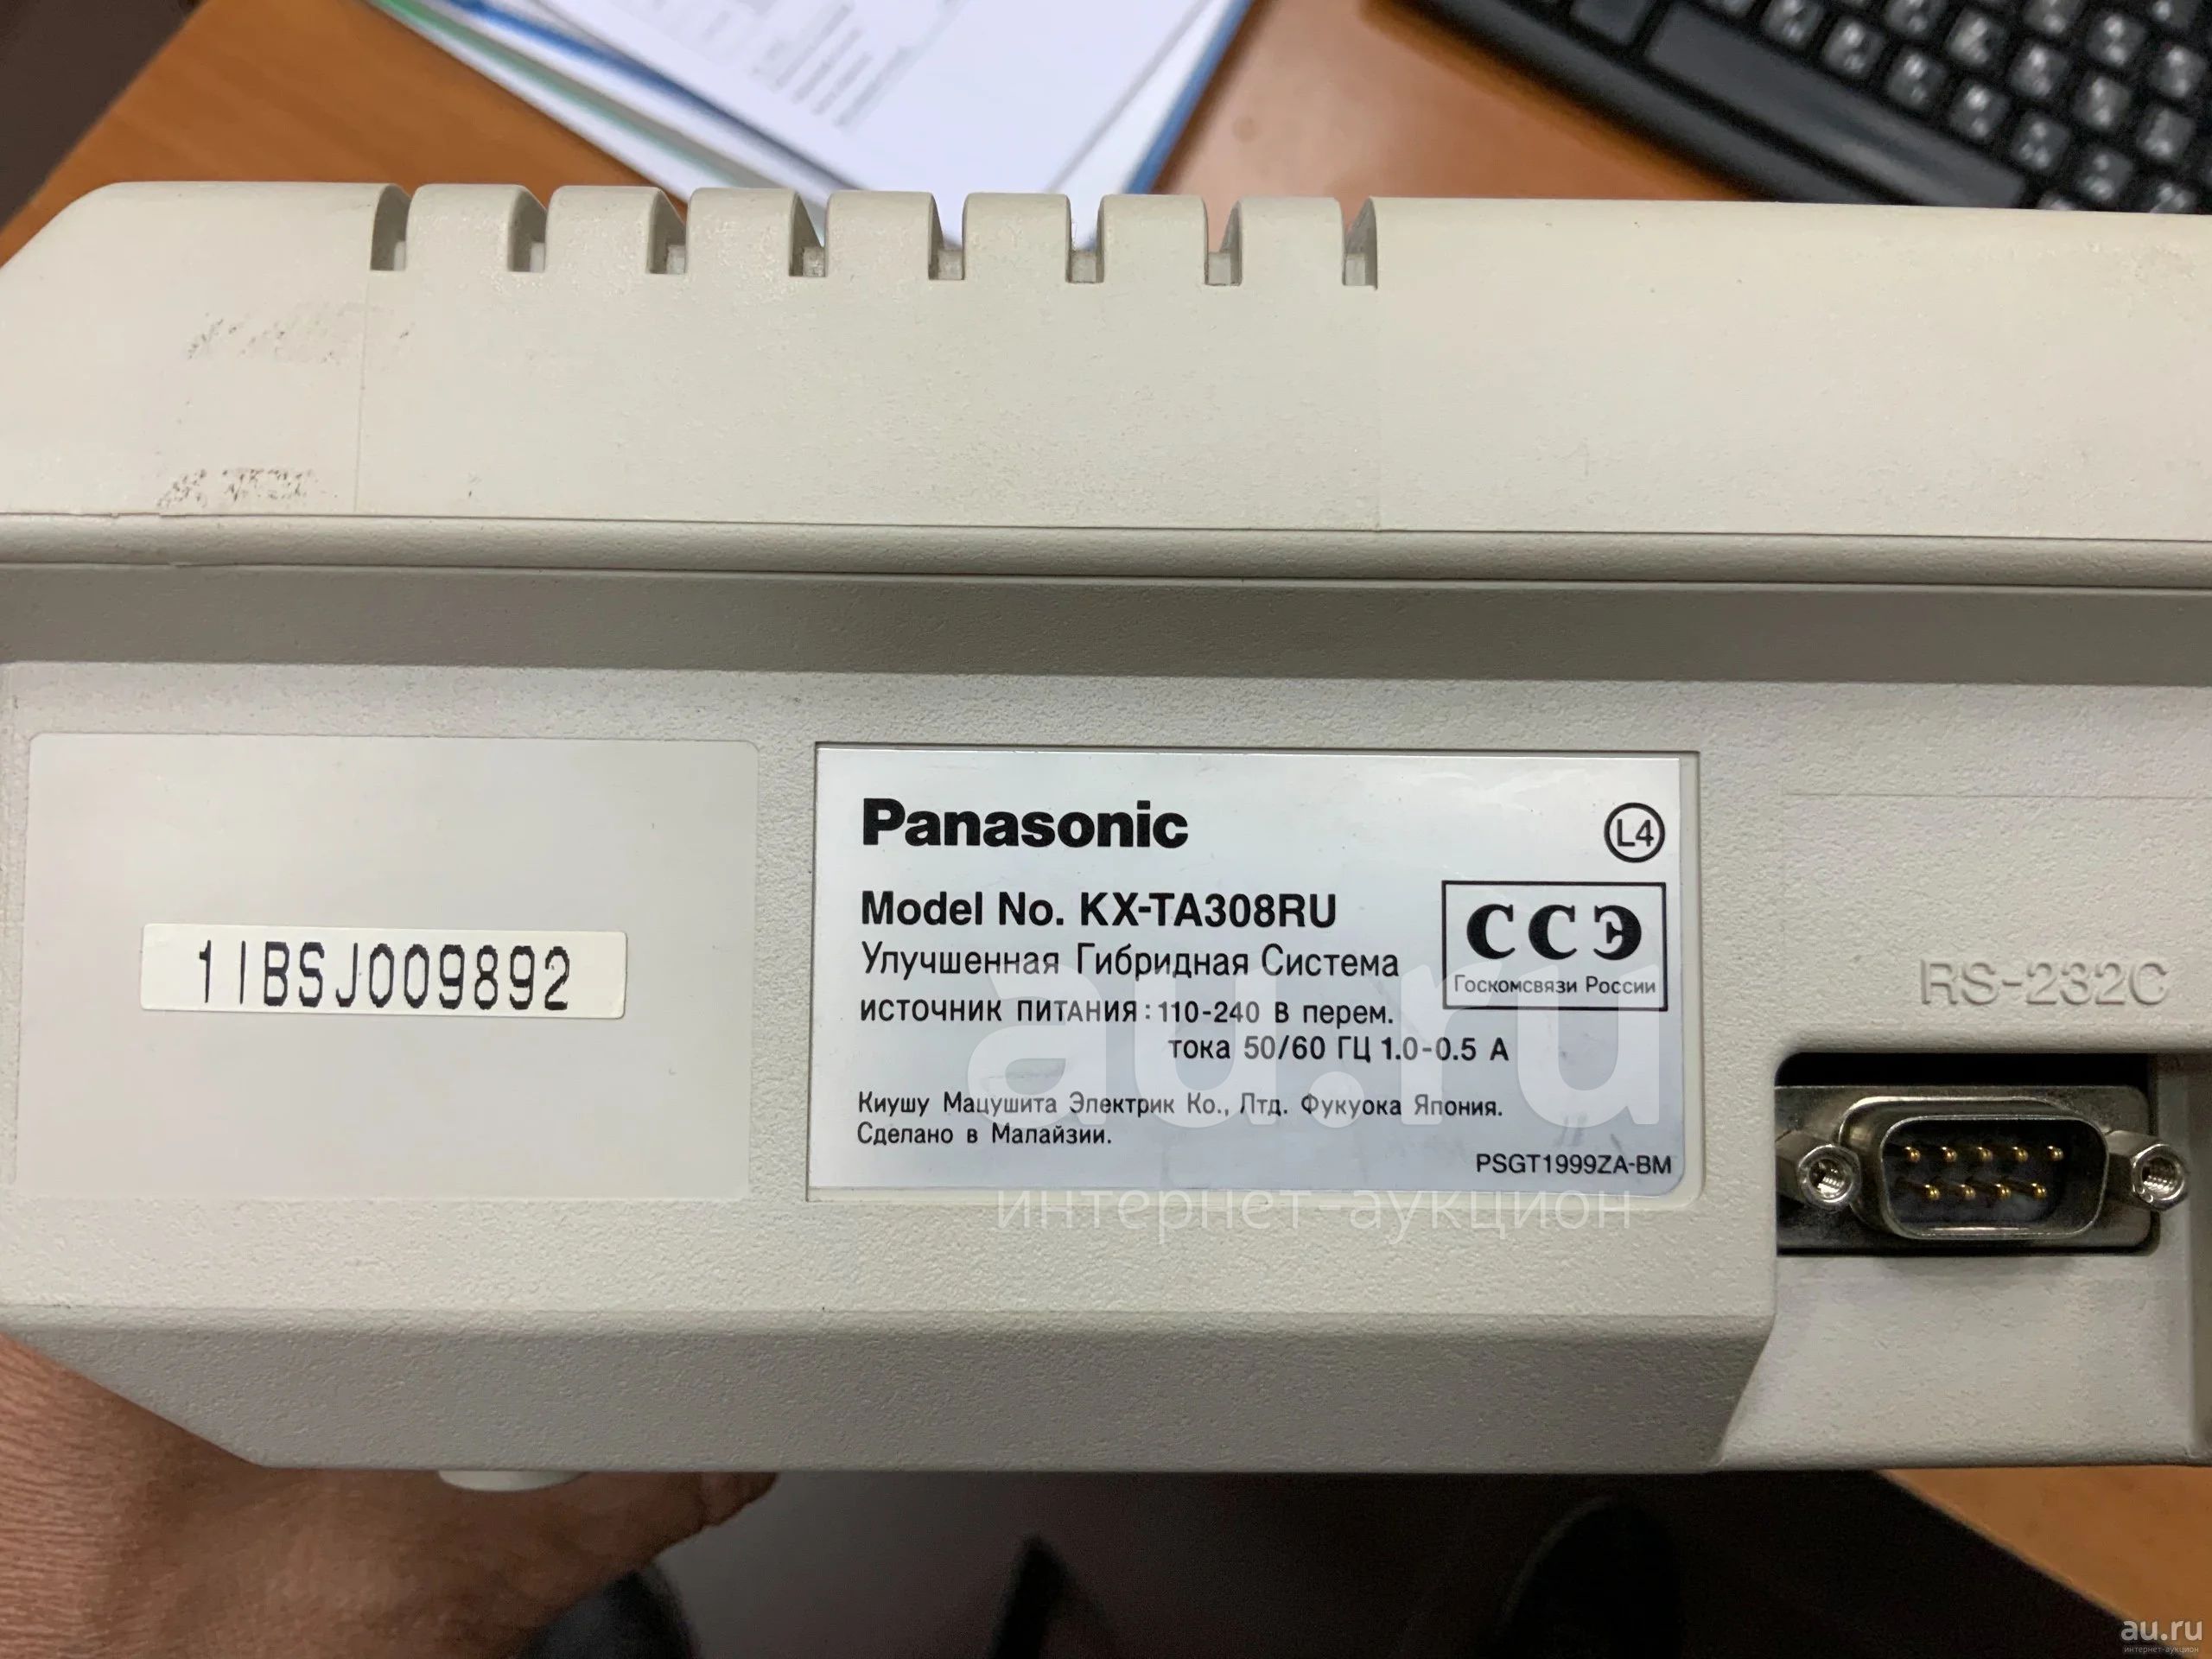 Panasonic KX-ta308. Мини АТС Panasonic KX-ta308. Panasonic 308 АТС. Программатор АТС Panasonic KX-ta 308.